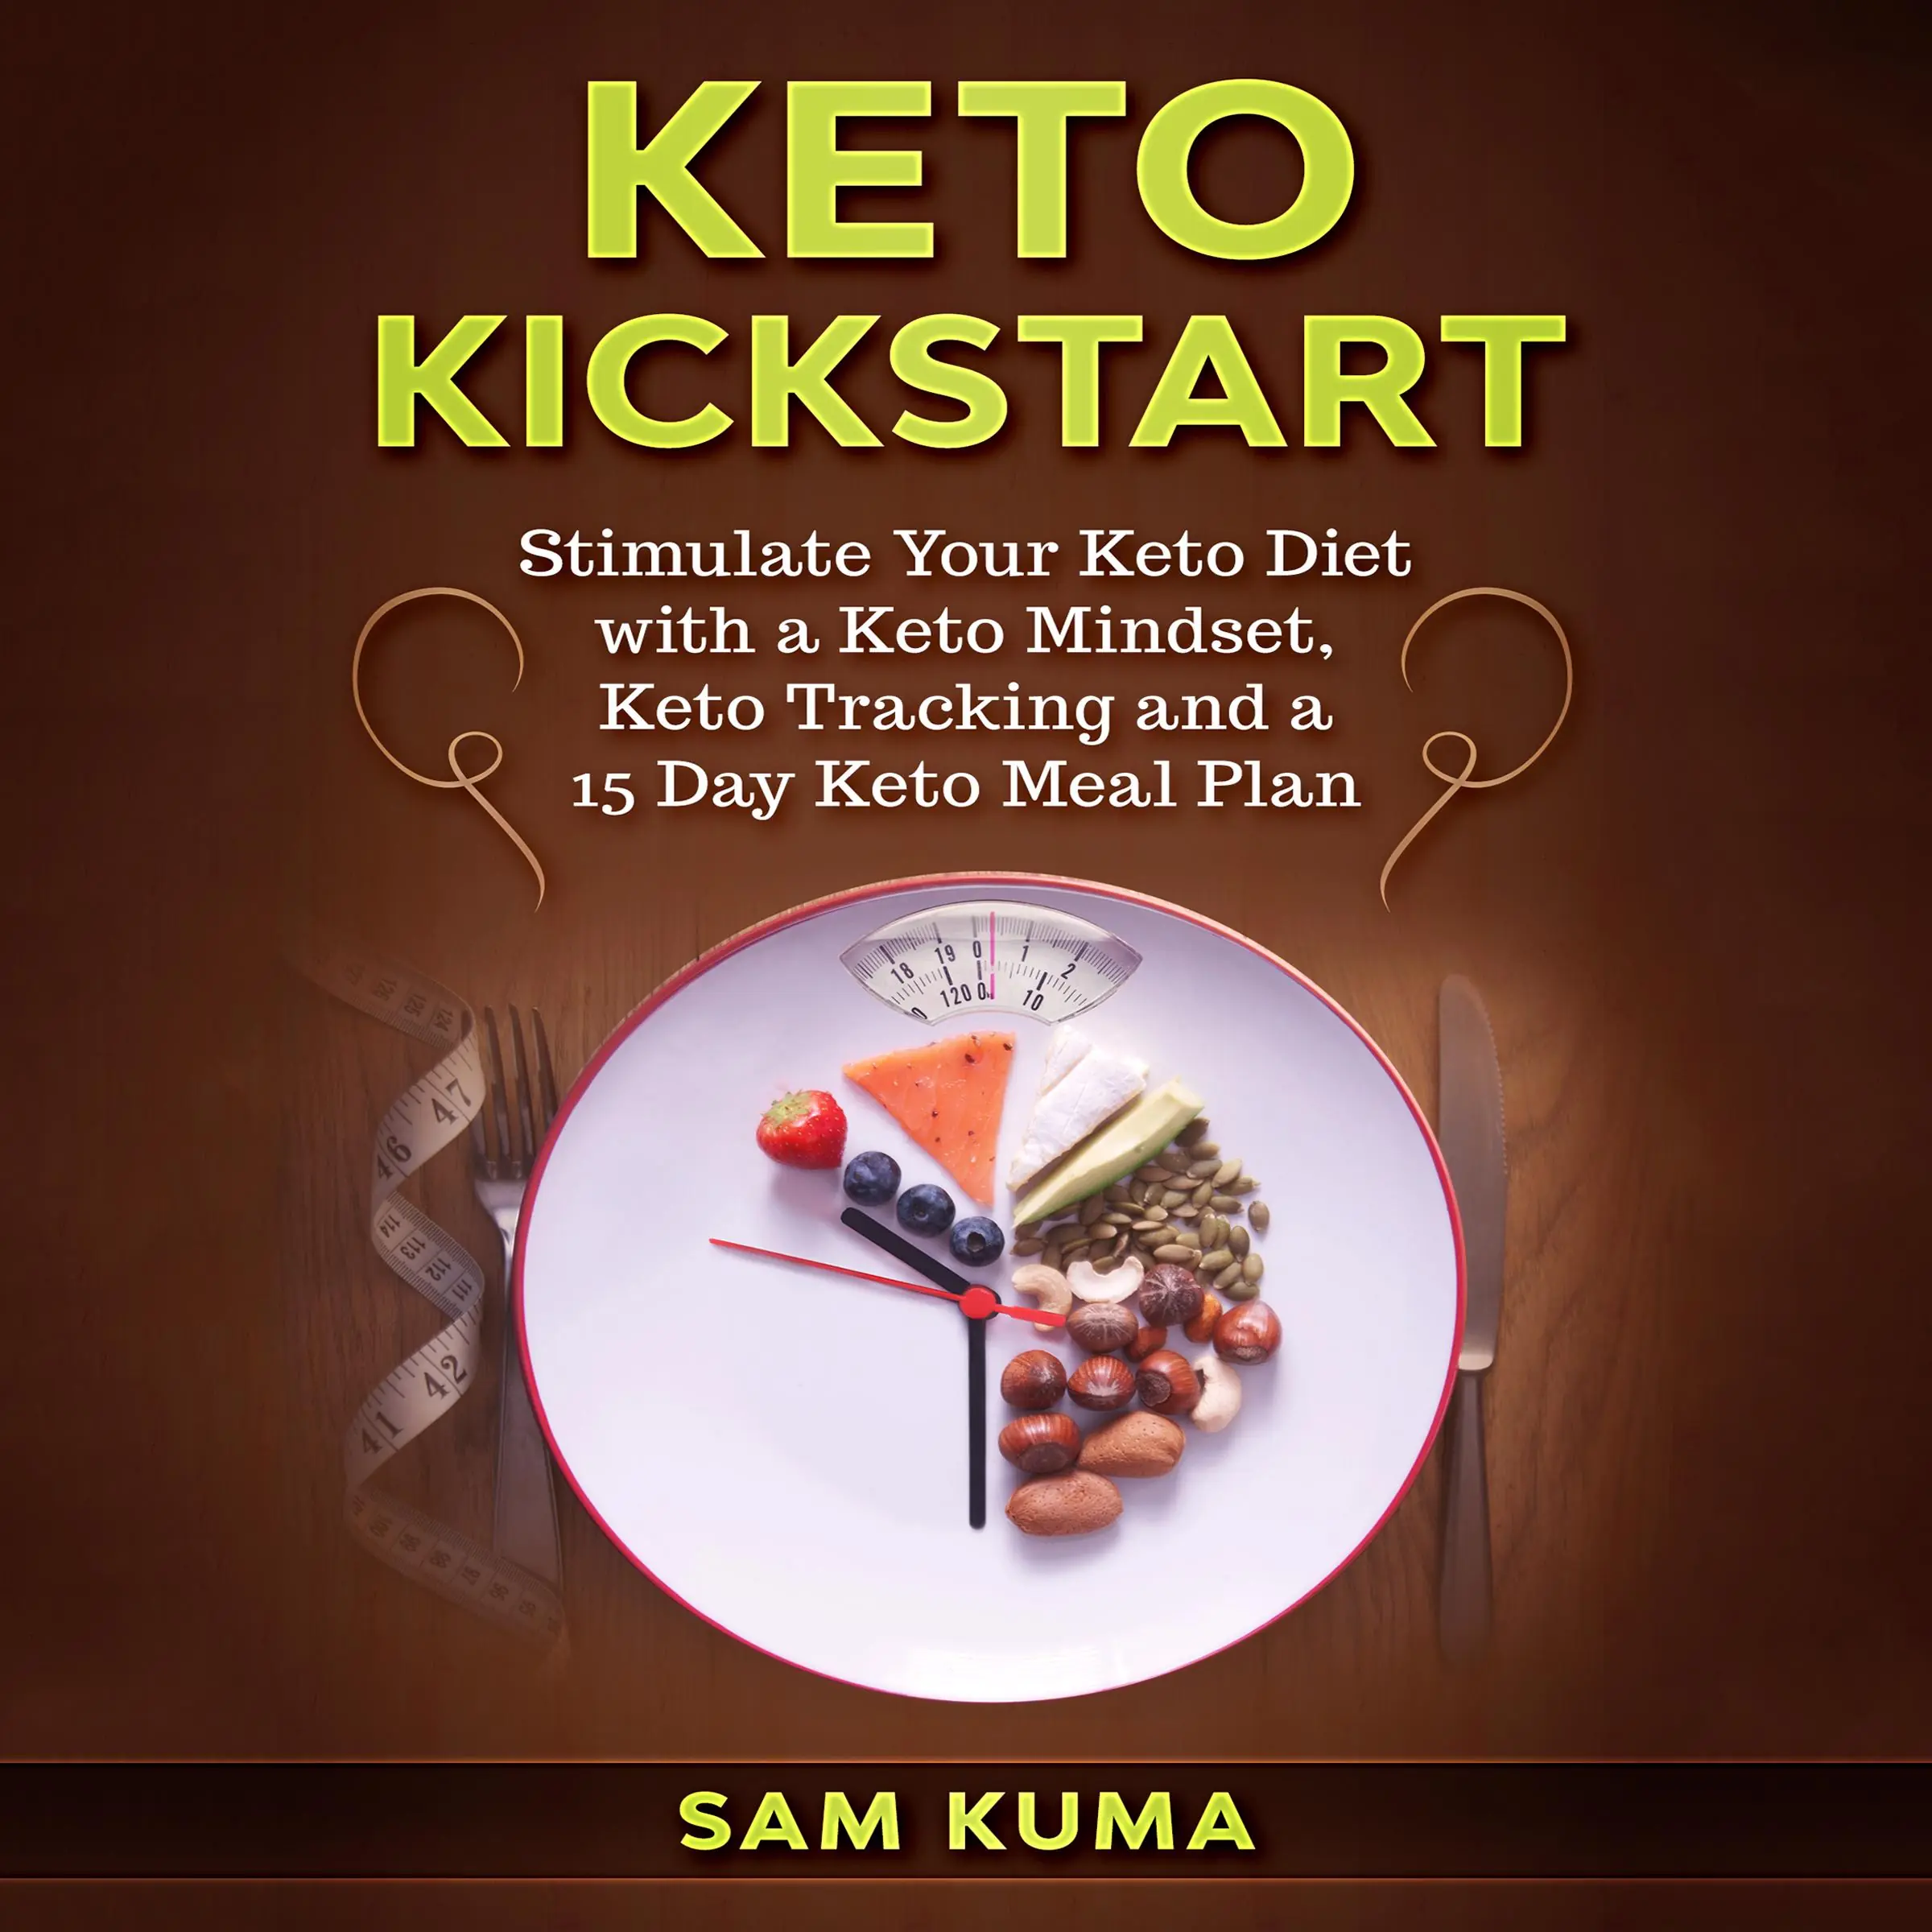 Keto Kickstart: Stimulate Your Keto Diet with a Keto Mindset, Keto Tracking and a 15 Day Keto Meal Plan Audiobook by Sam Kuma